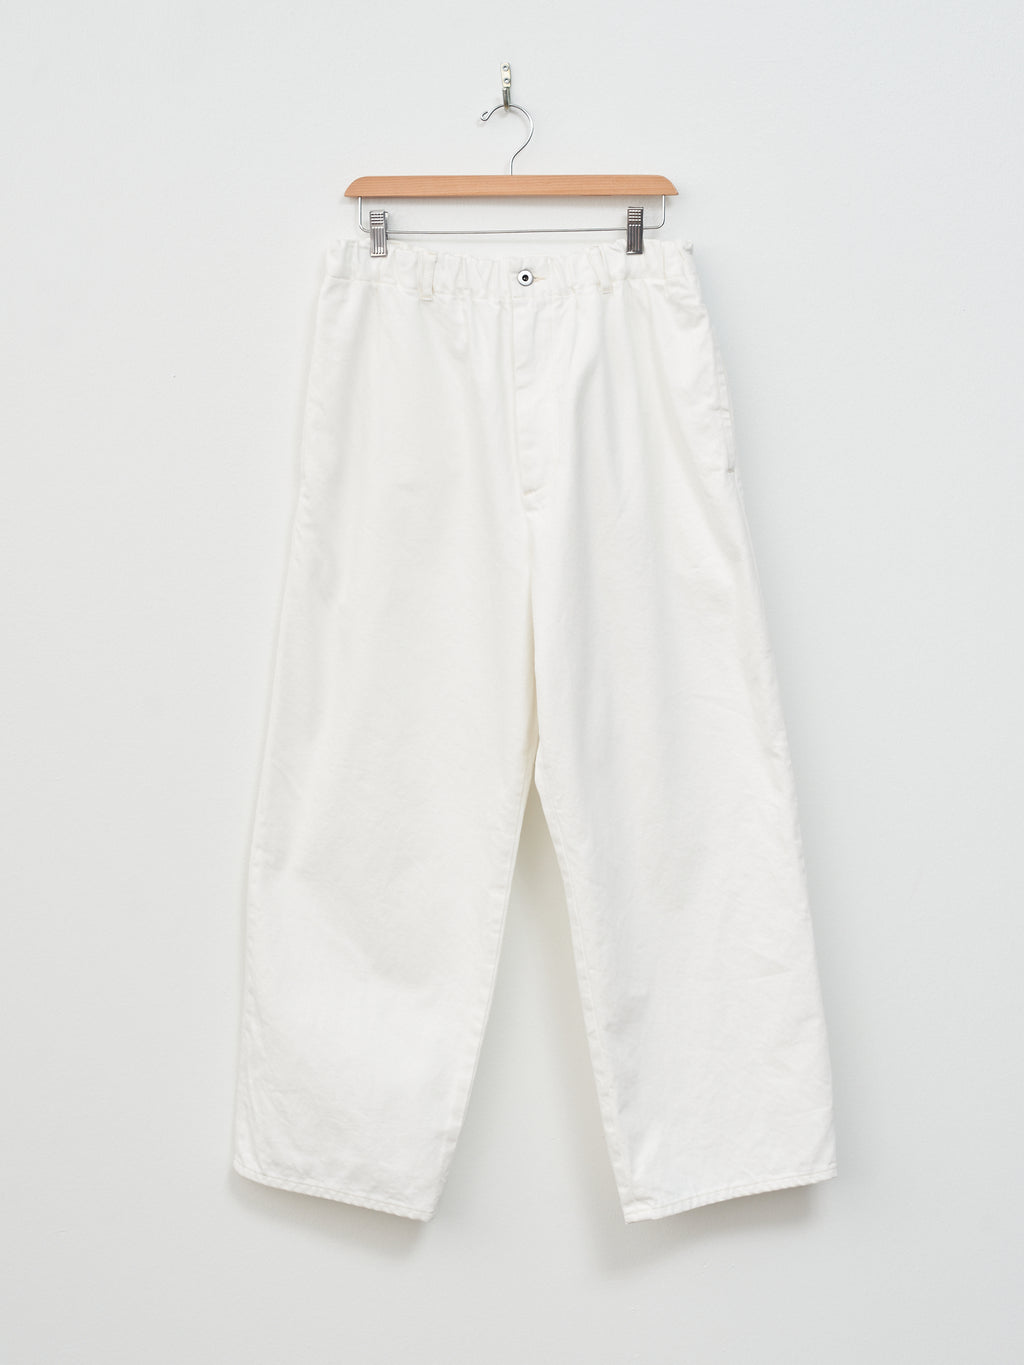 Namu Shop - Yoko Sakamoto Denim Trousers - White (One Wash)